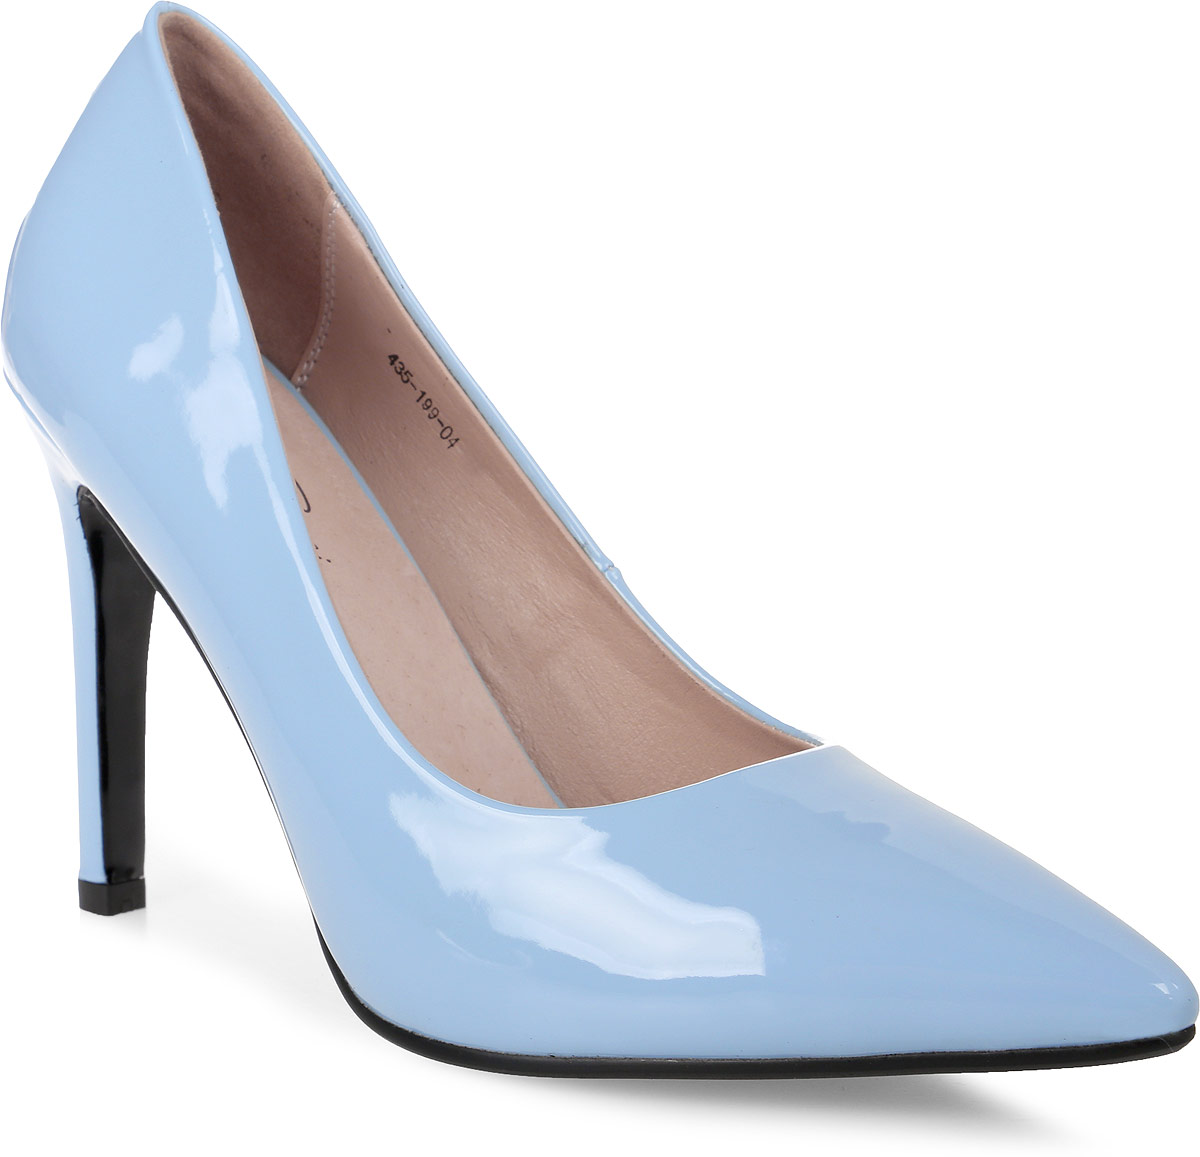 Туфли женские Dino Ricci, цвет: голубой. 435-199-04. Размер 35